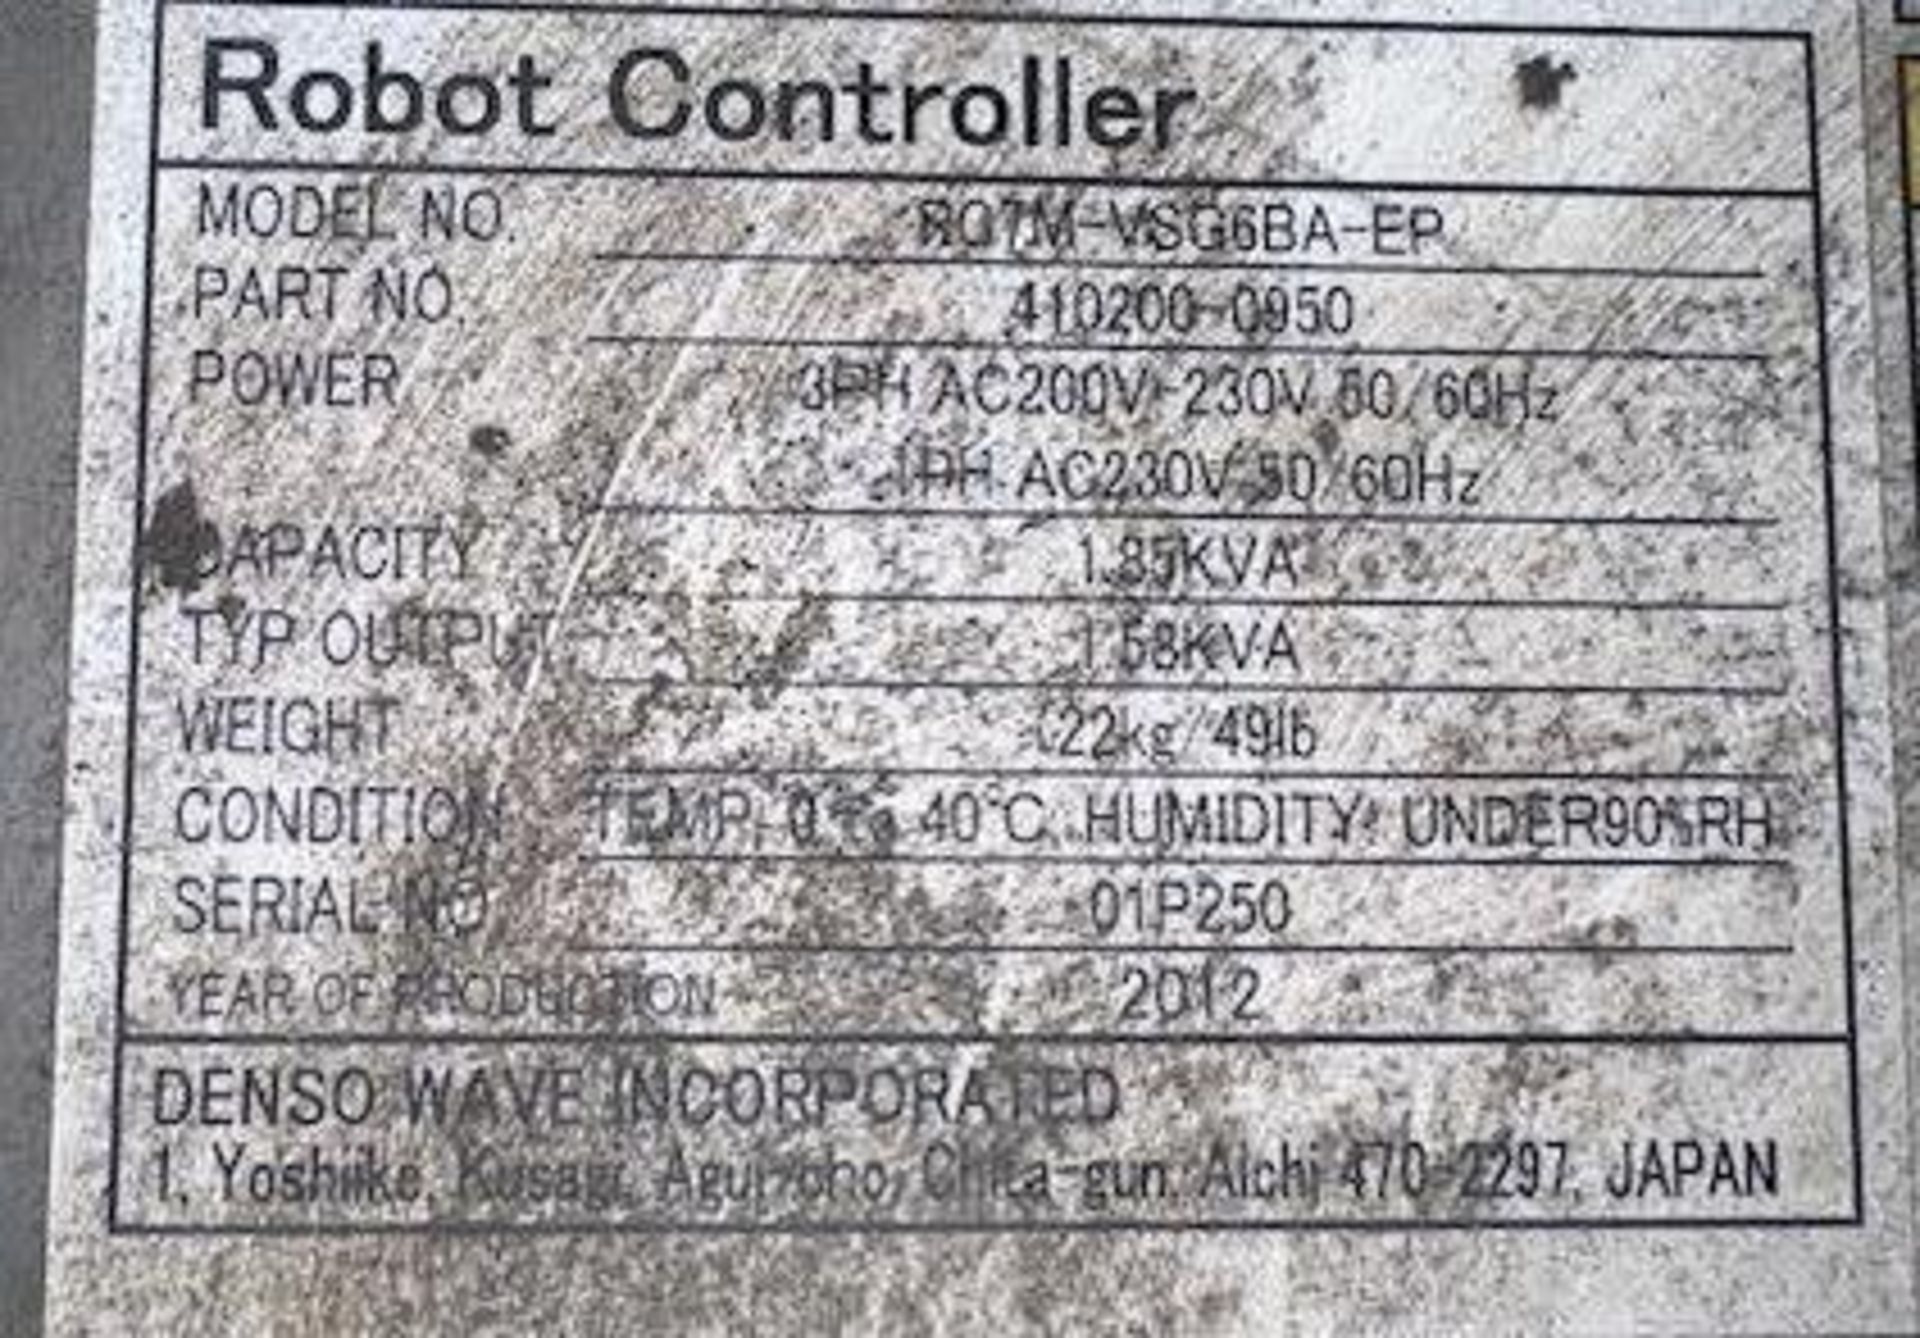 6 Axis Denso Robot w/ Controller - Image 7 of 7